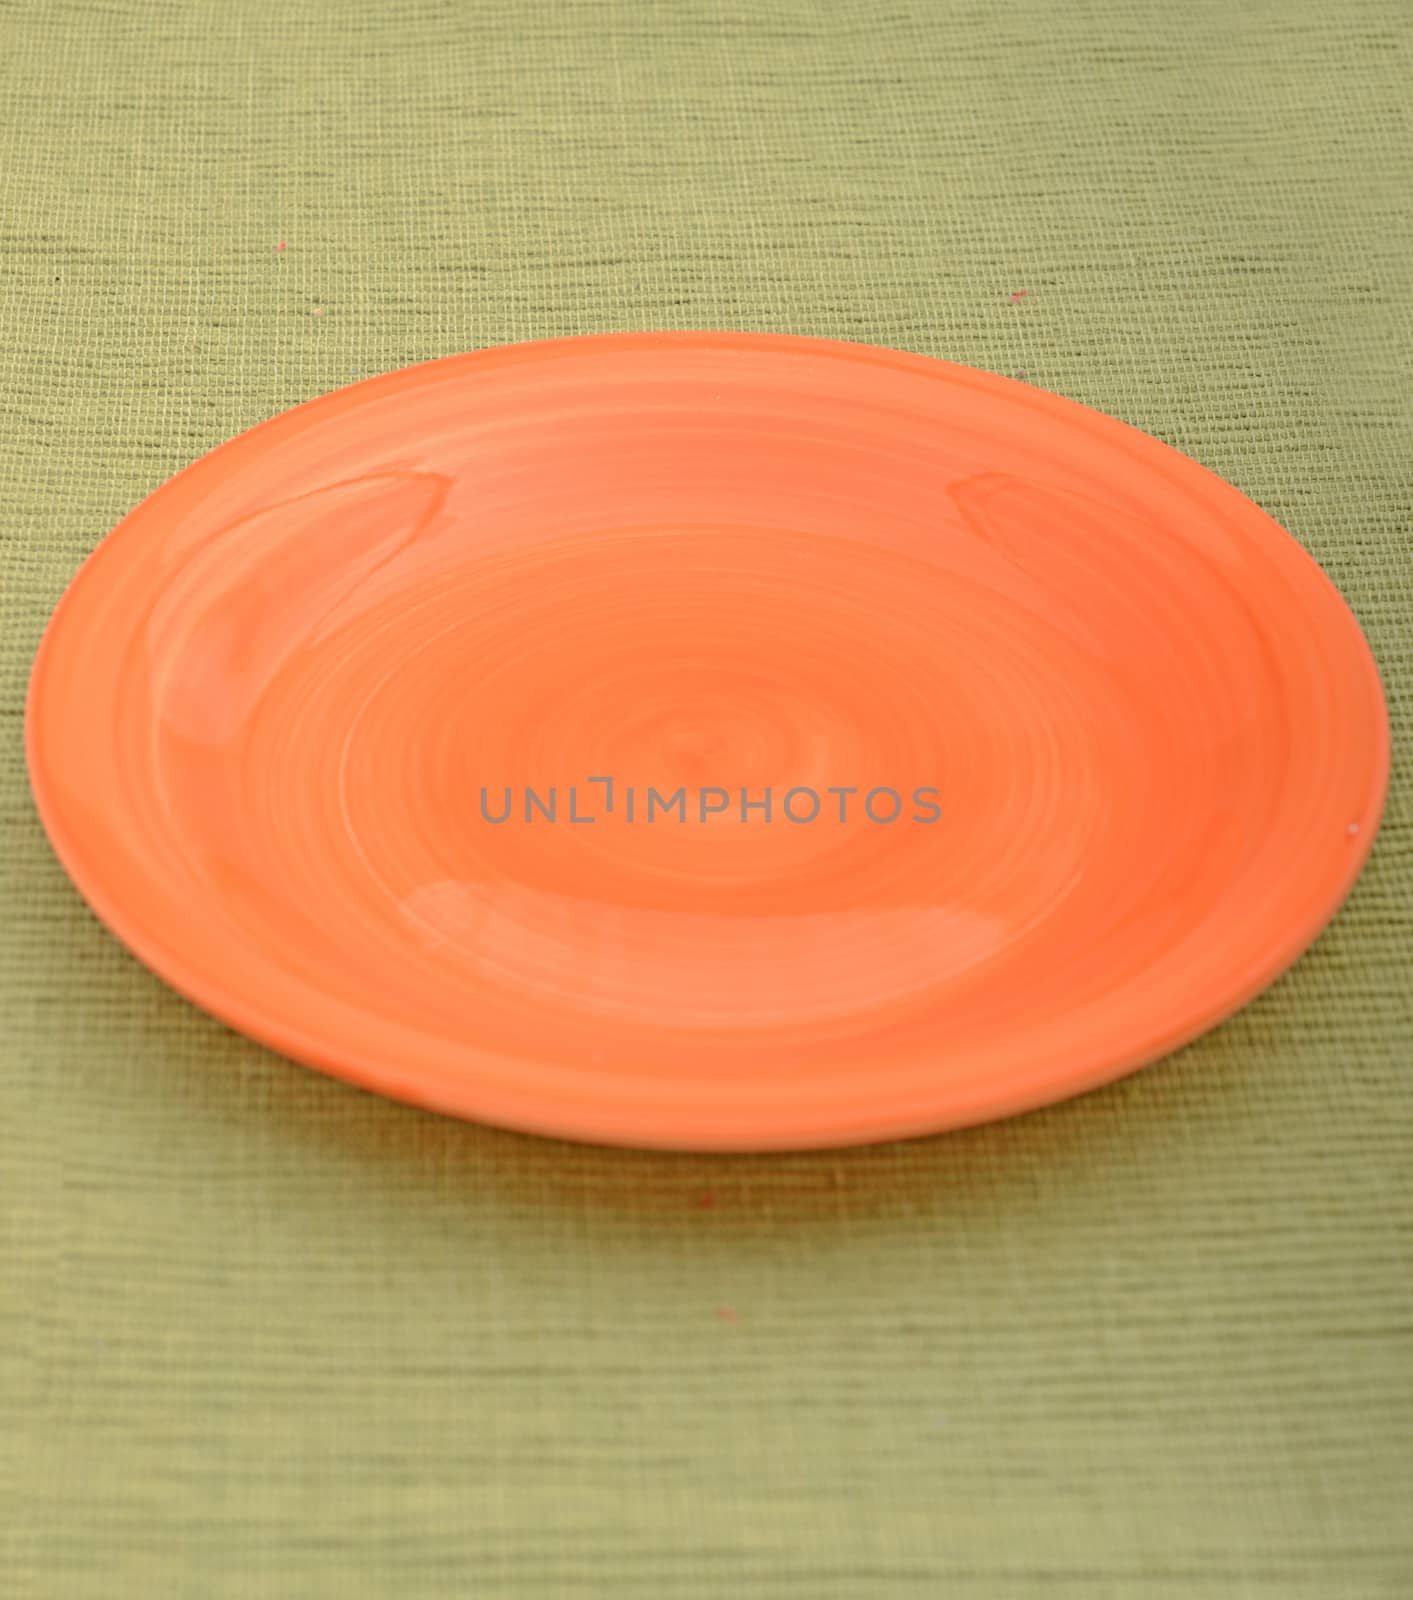 empty orange plate by ftlaudgirl